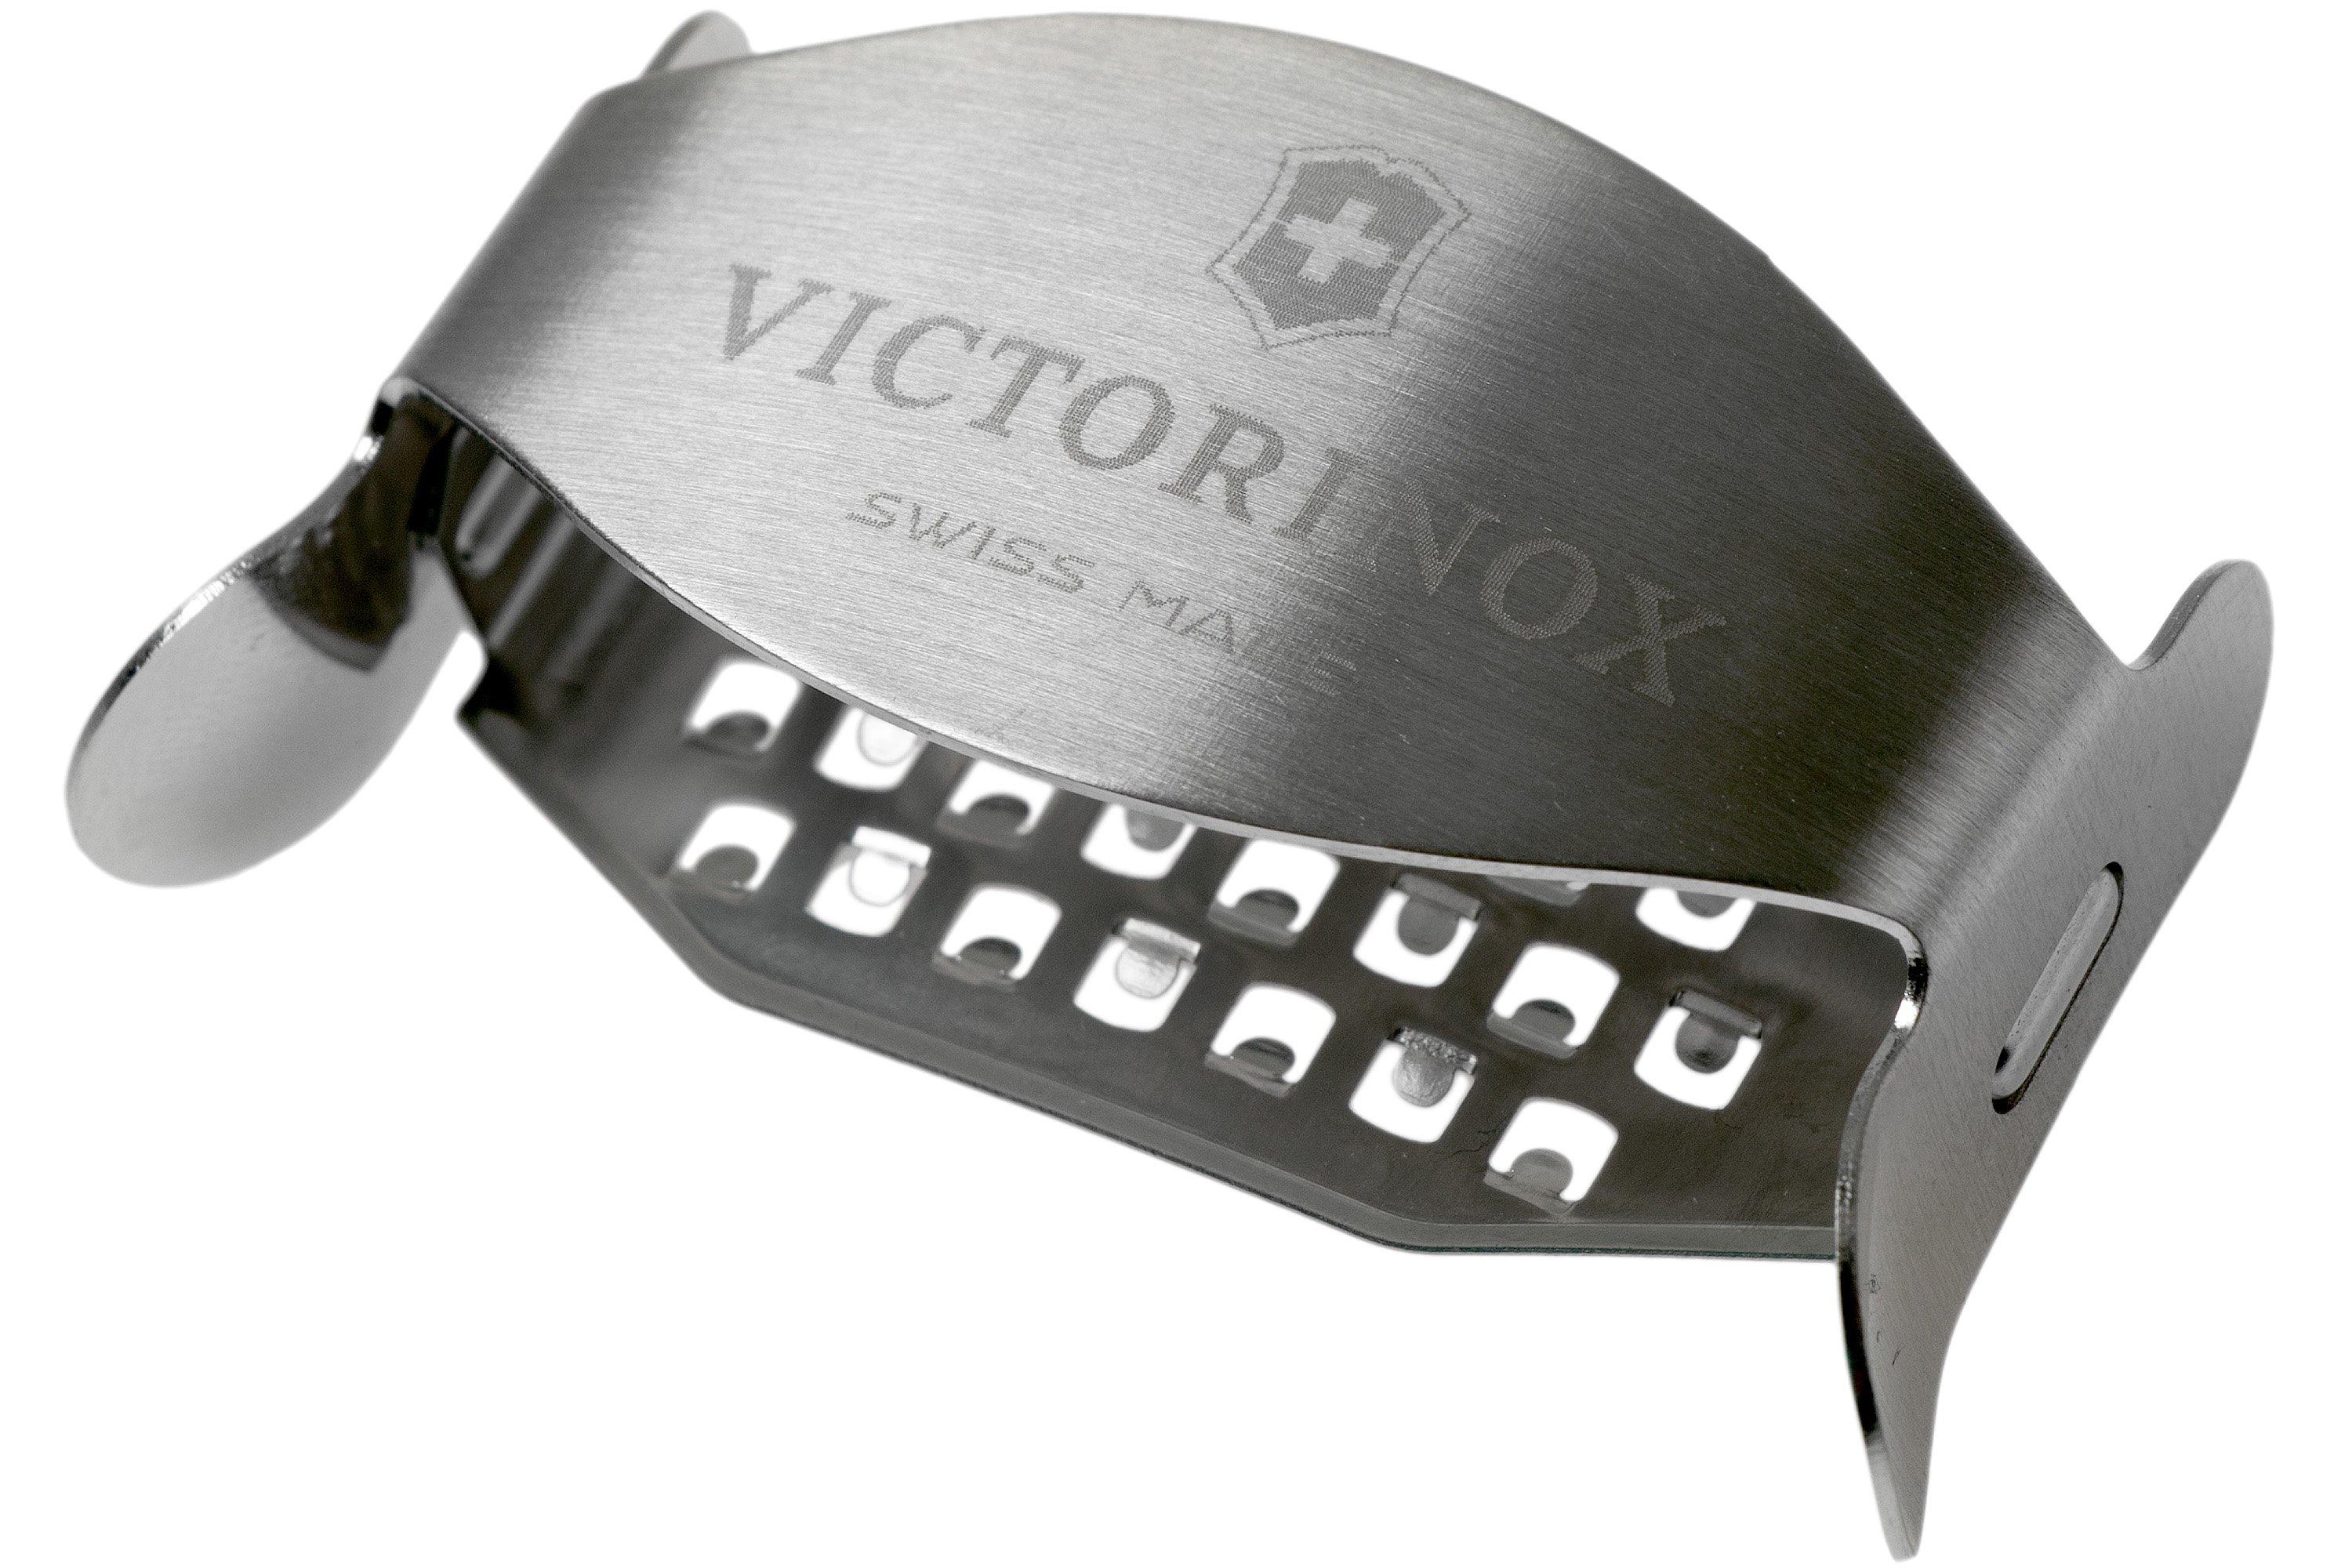 Victorinox - Fine cheese grater - V-7.60 76 - kitchen item